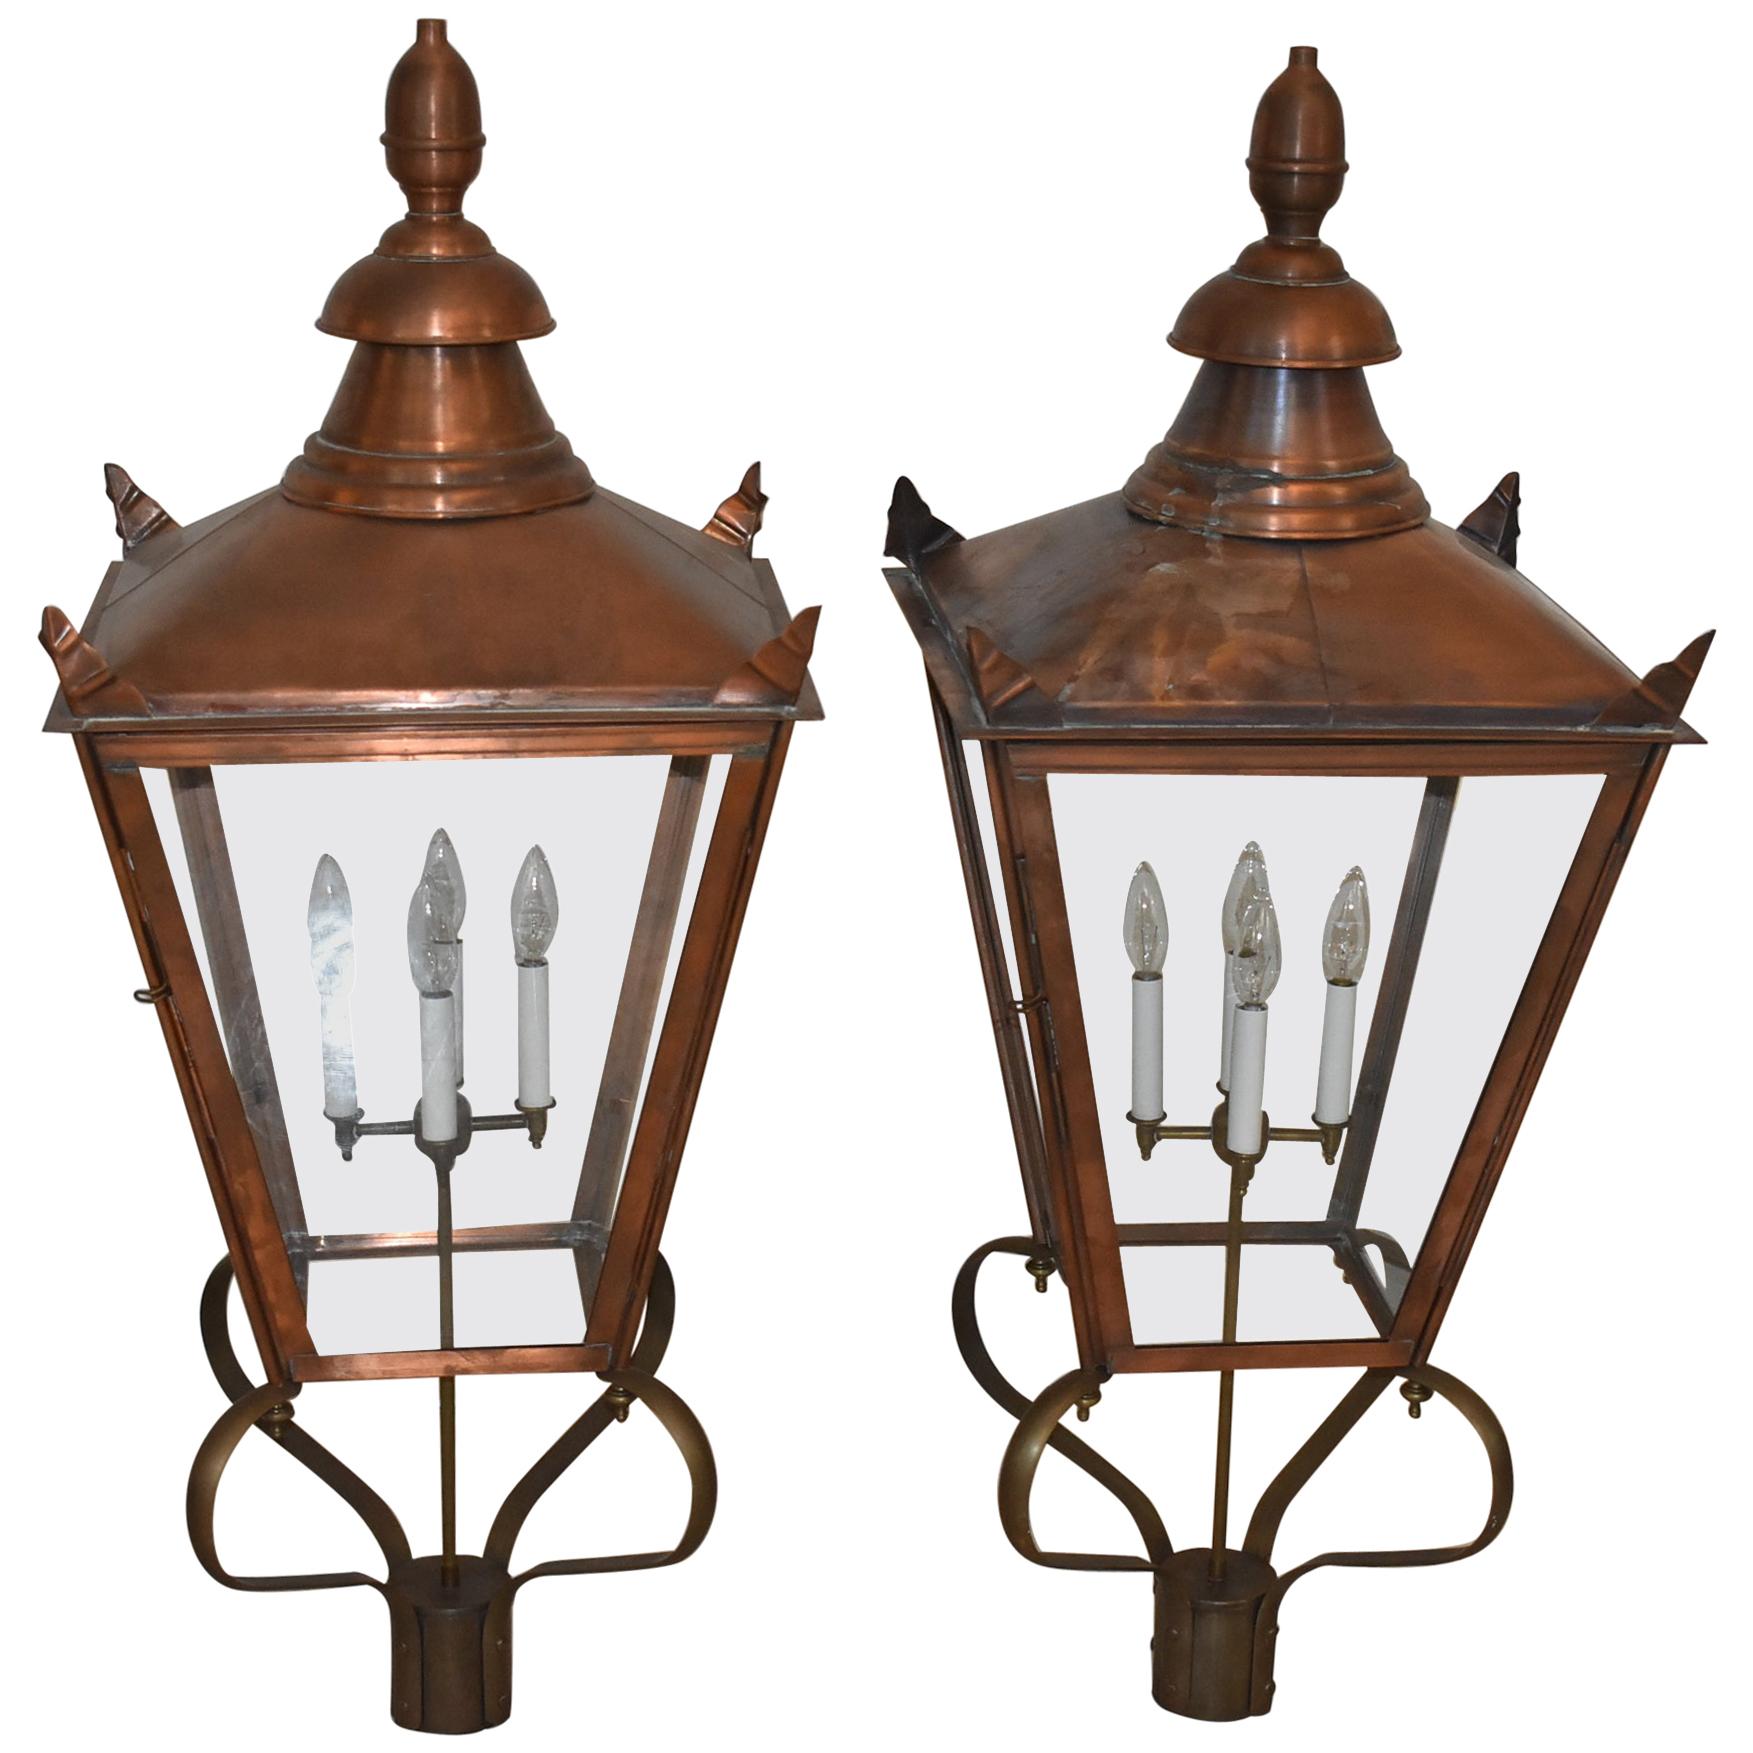 Pair of Copper & Brass Exterior Williamsburg Style Lanterns